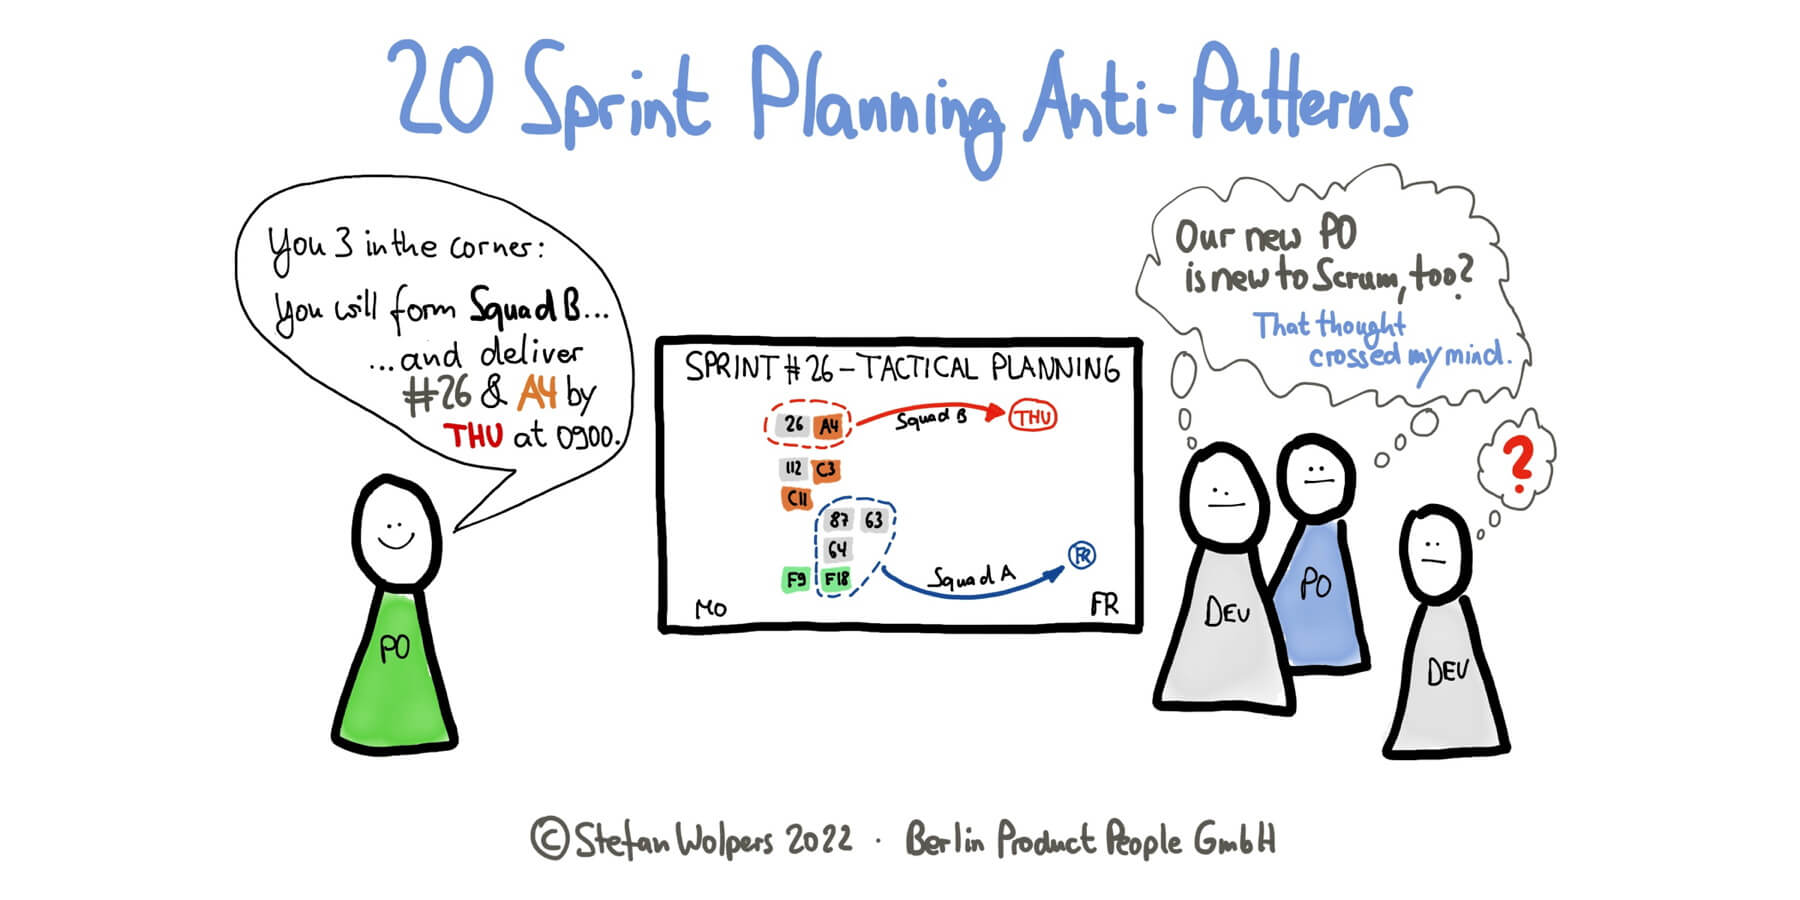 20 Sprint Planning Anti-patterns